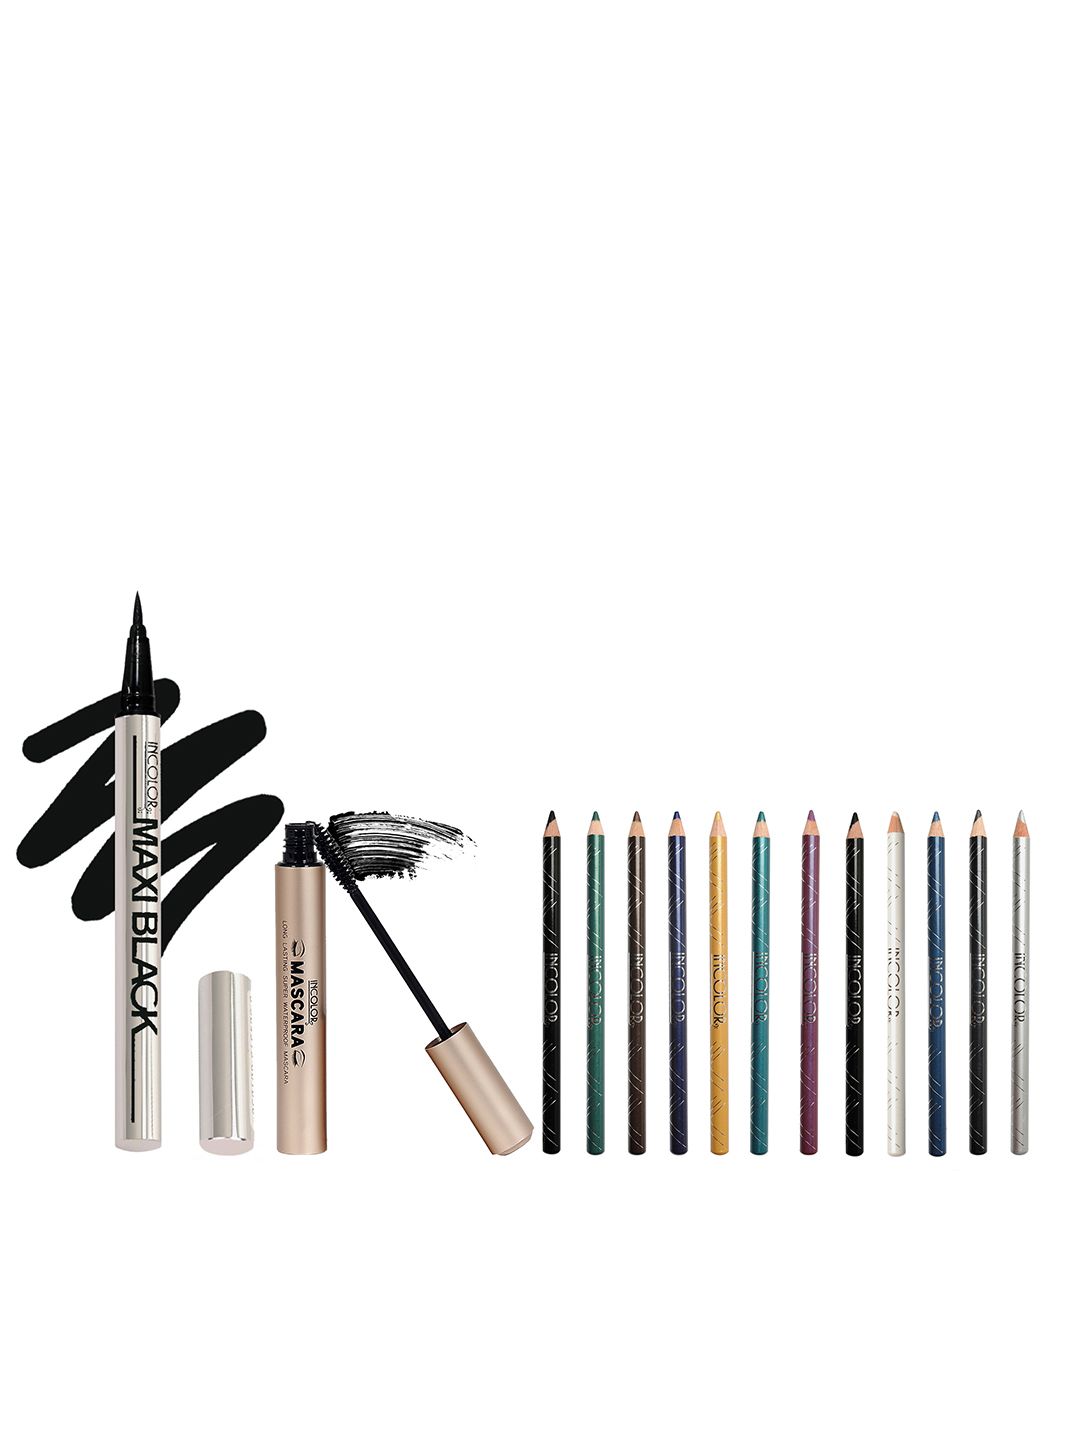 INCOLOR Set of MaxiBlack Pen Eyeliner, Mascara & 12 Intense Long-wear Eye Pencils Price in India